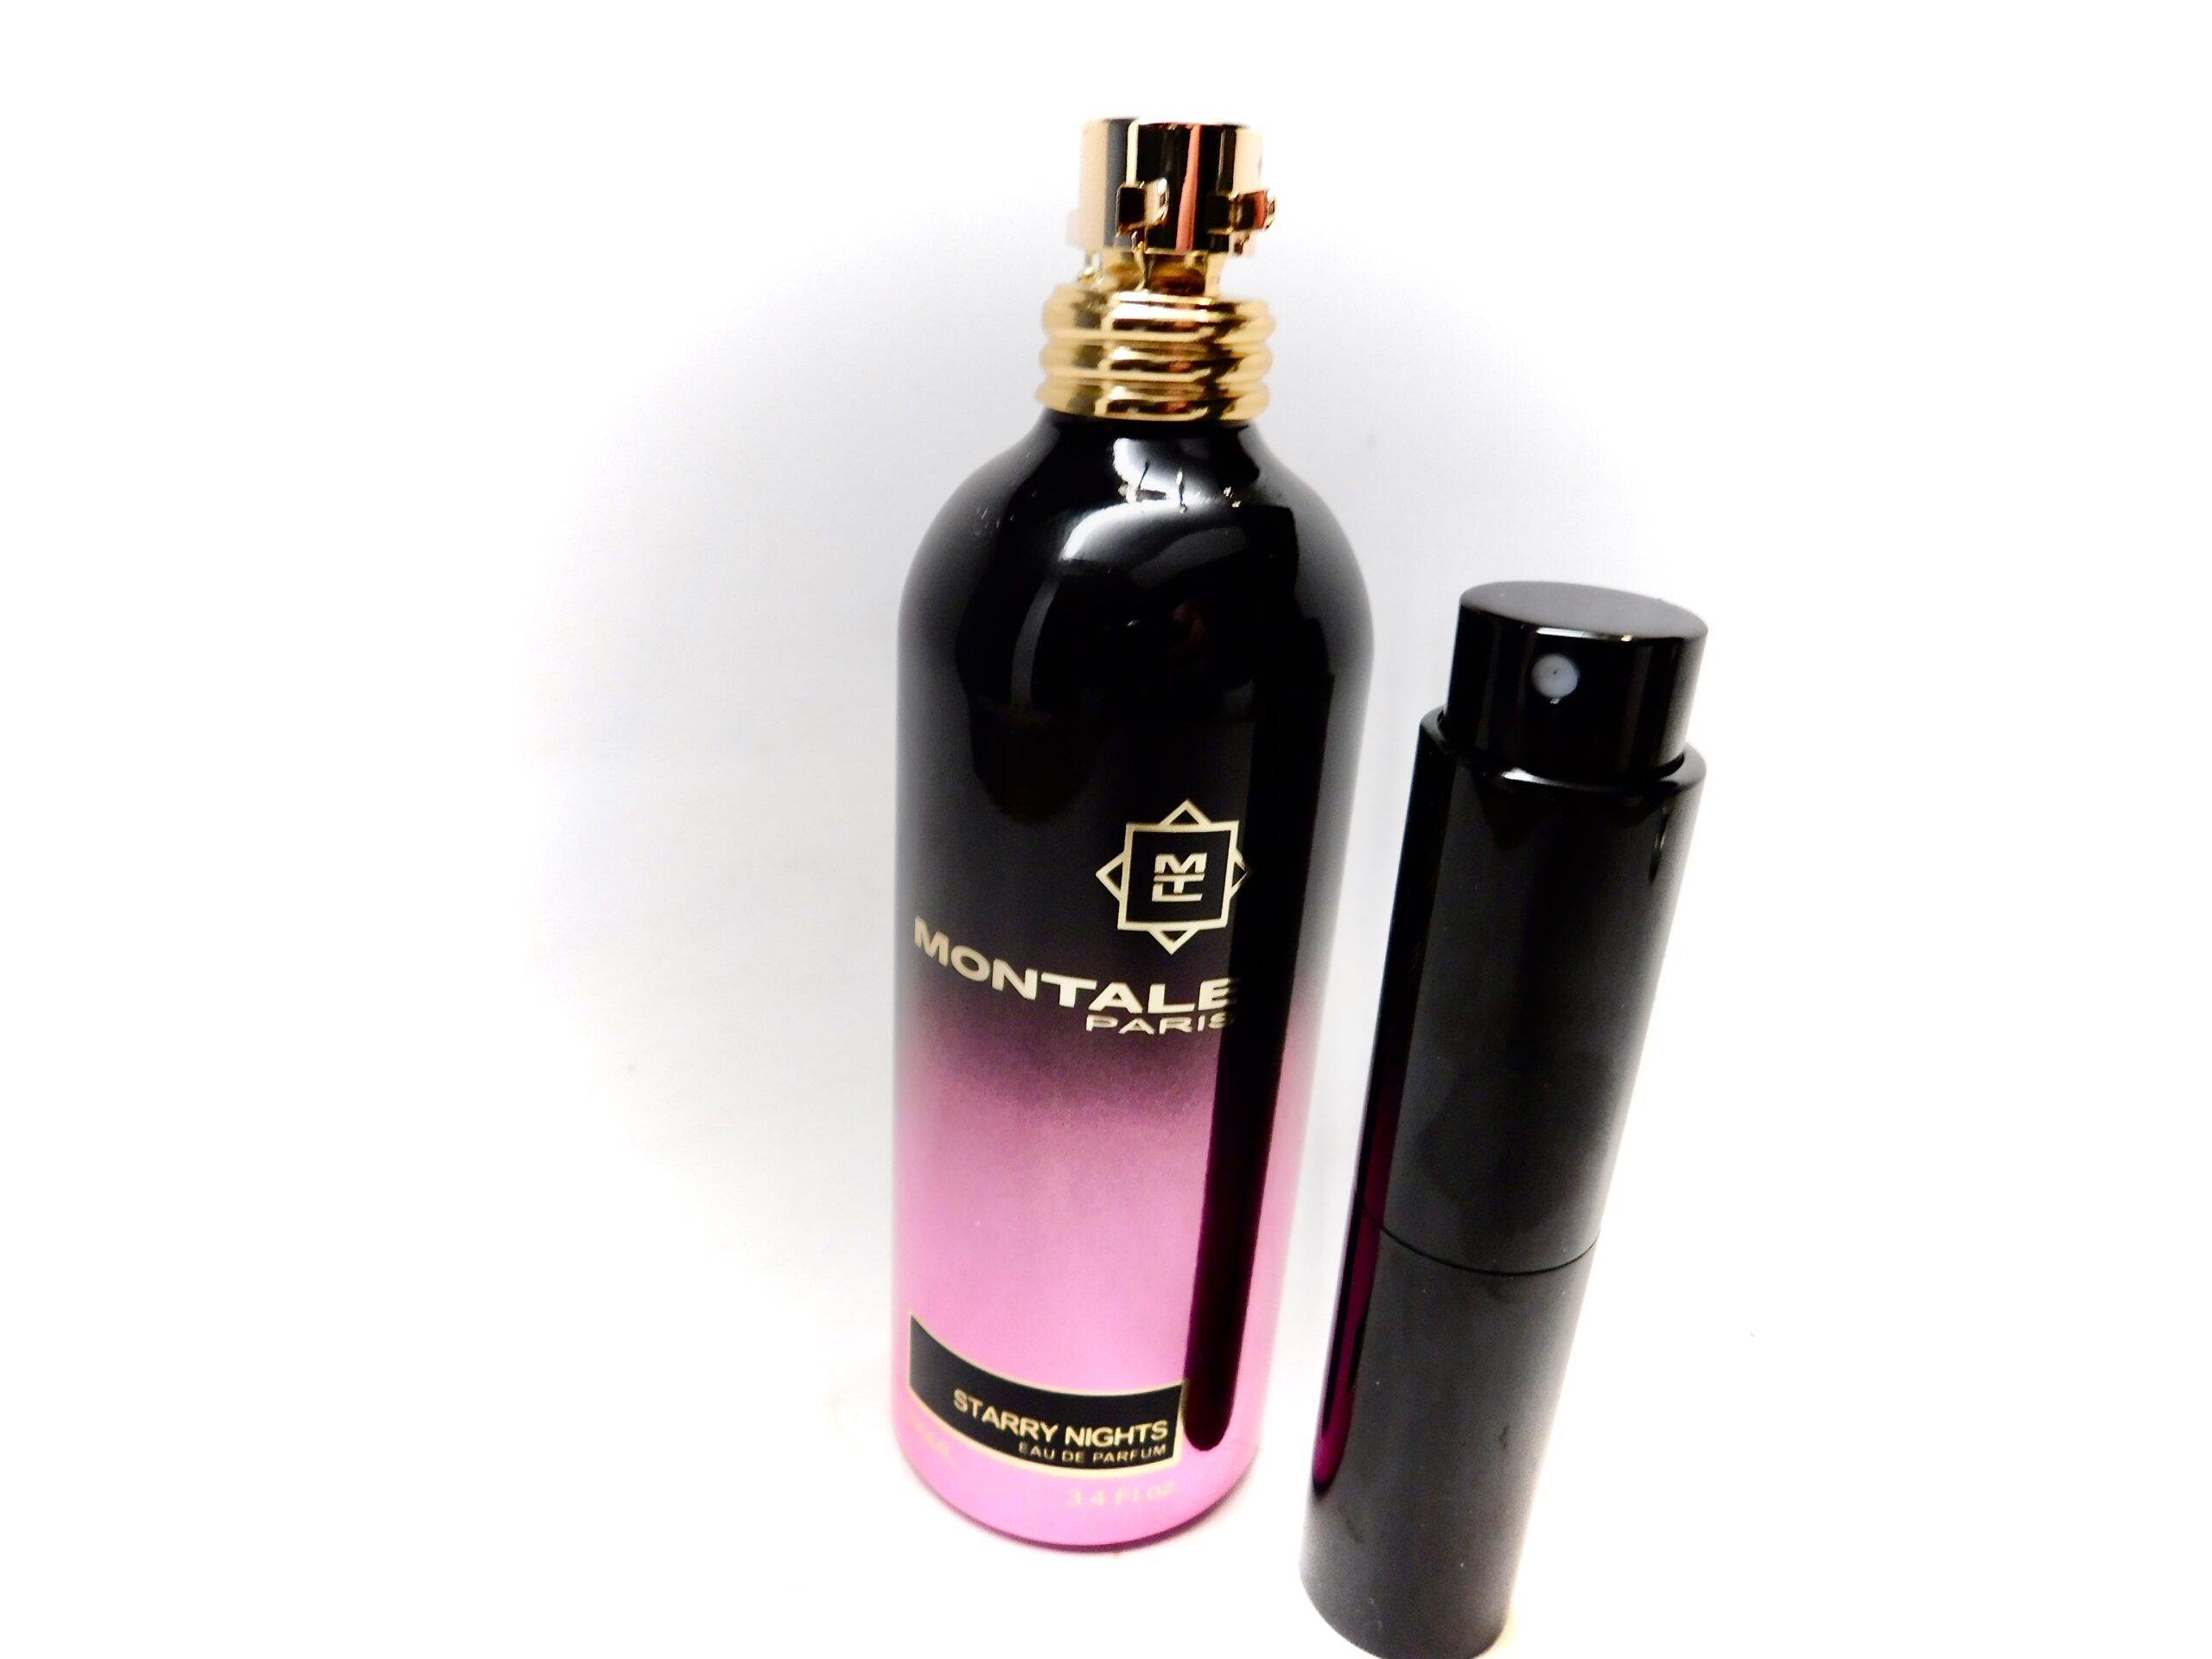 Montale Starry Nights PARFUM 8ml travel atomizer sample citrus rose long  lasting - Best Brands Perfume